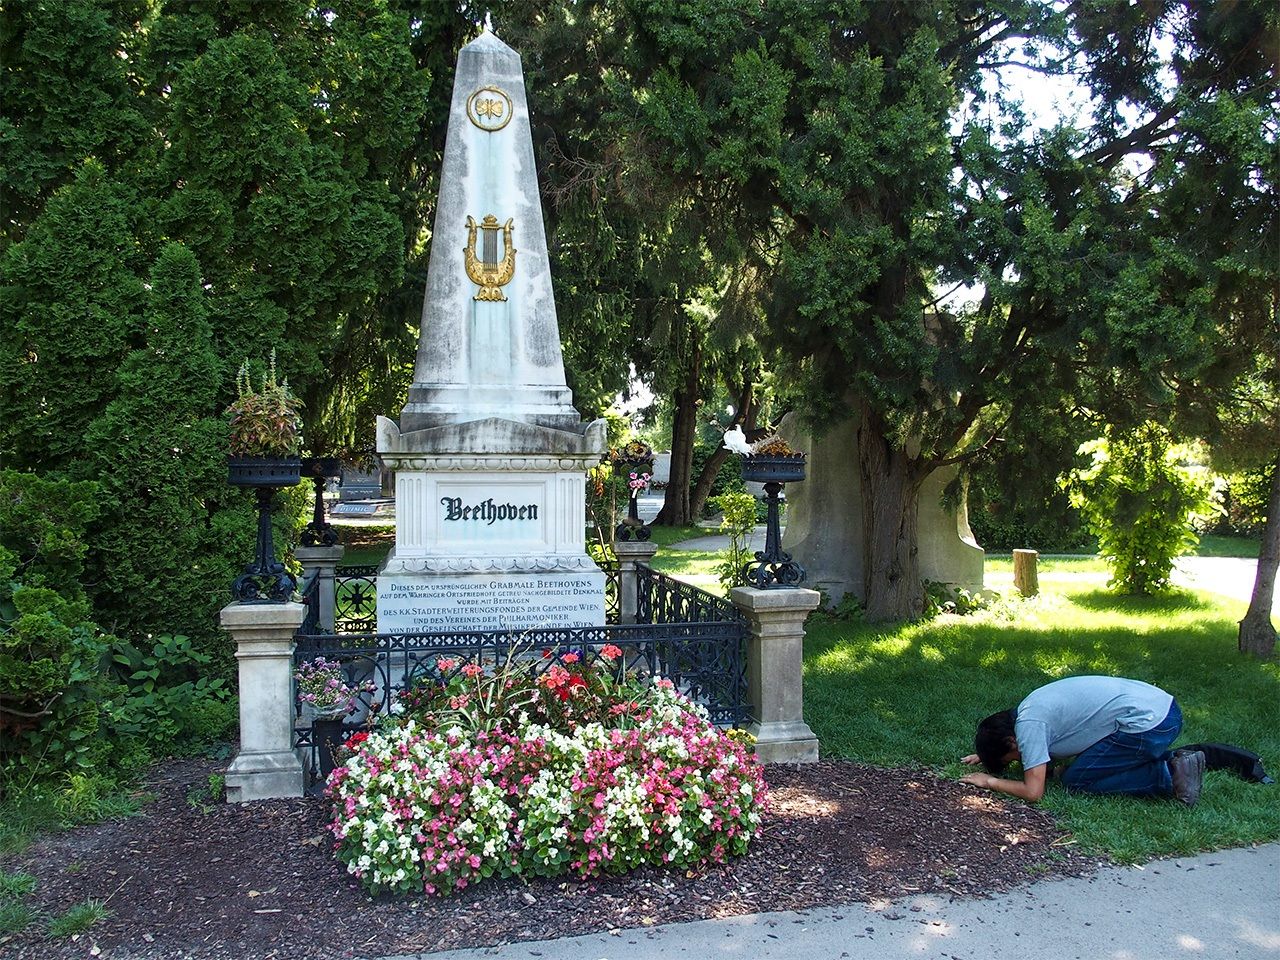 Kajipon has visited Beethoven’s grave six times.